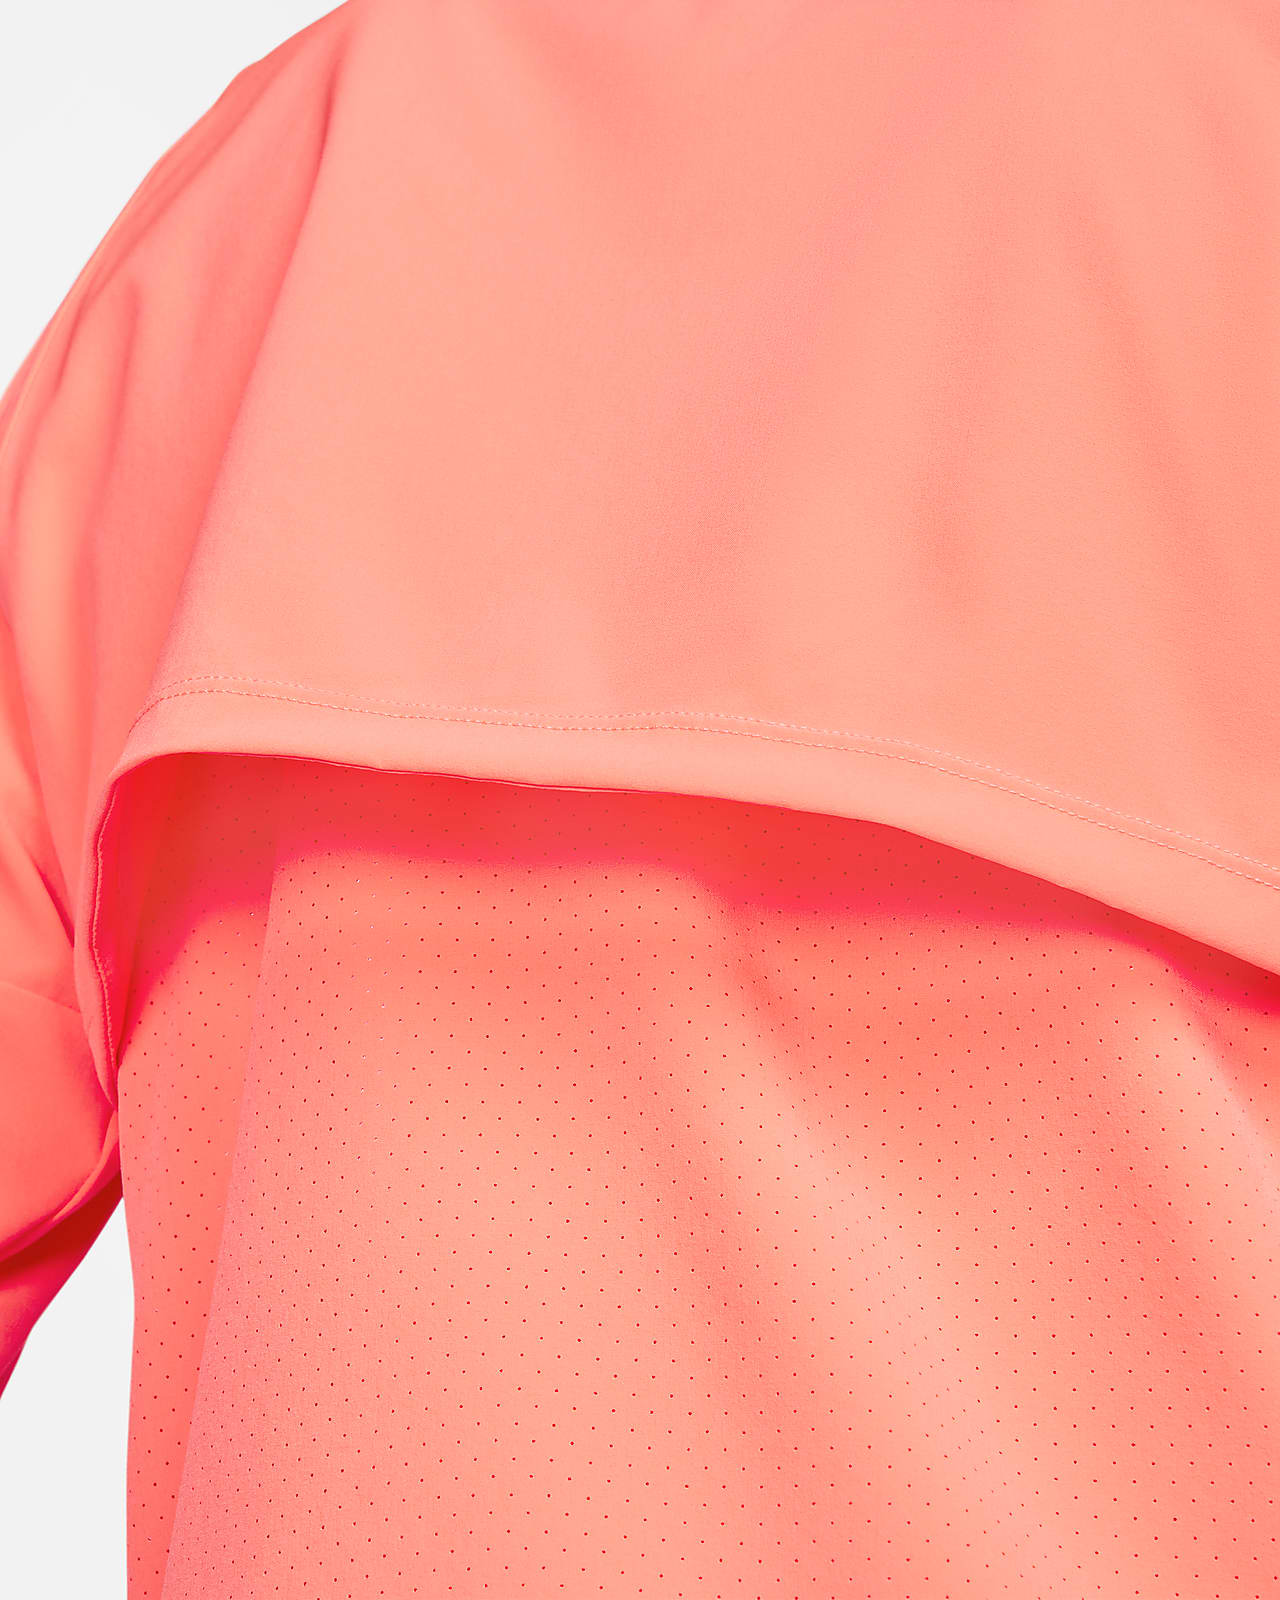 Nike Dri-FIT Rafa Men's Tennis Jacket